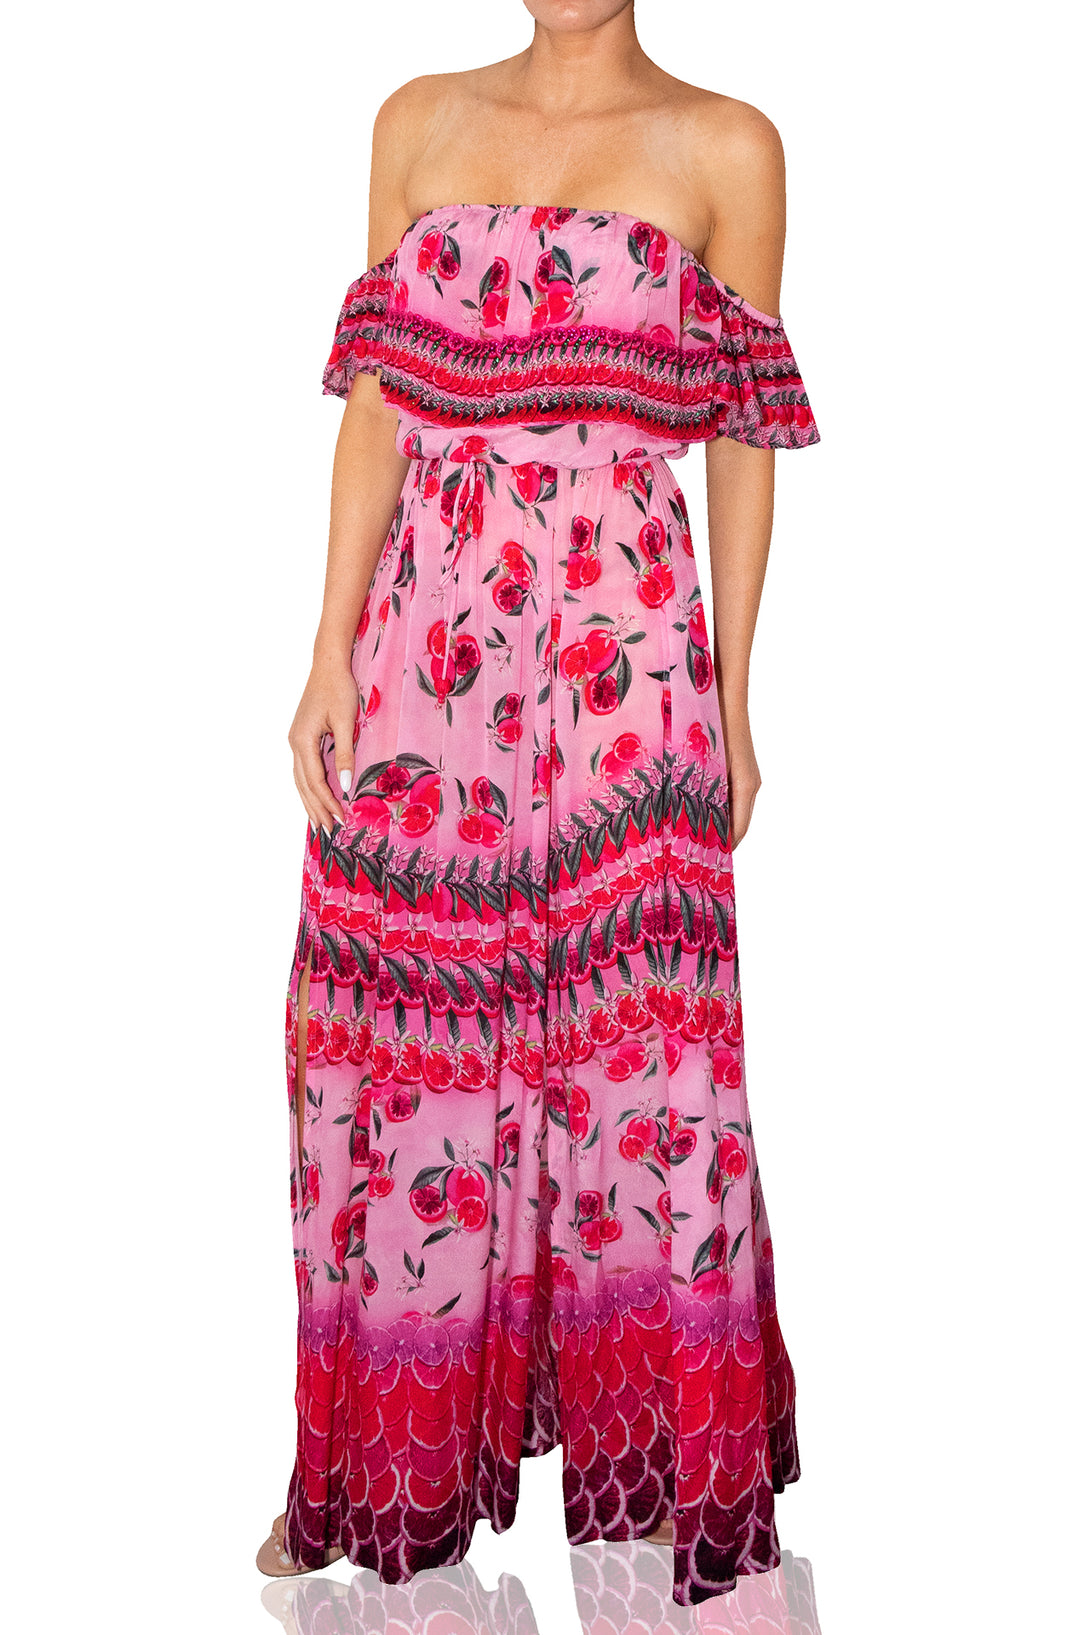  blush pink color dress, off the shoulder satin dress, summer maxi dress, Shahida Parides,